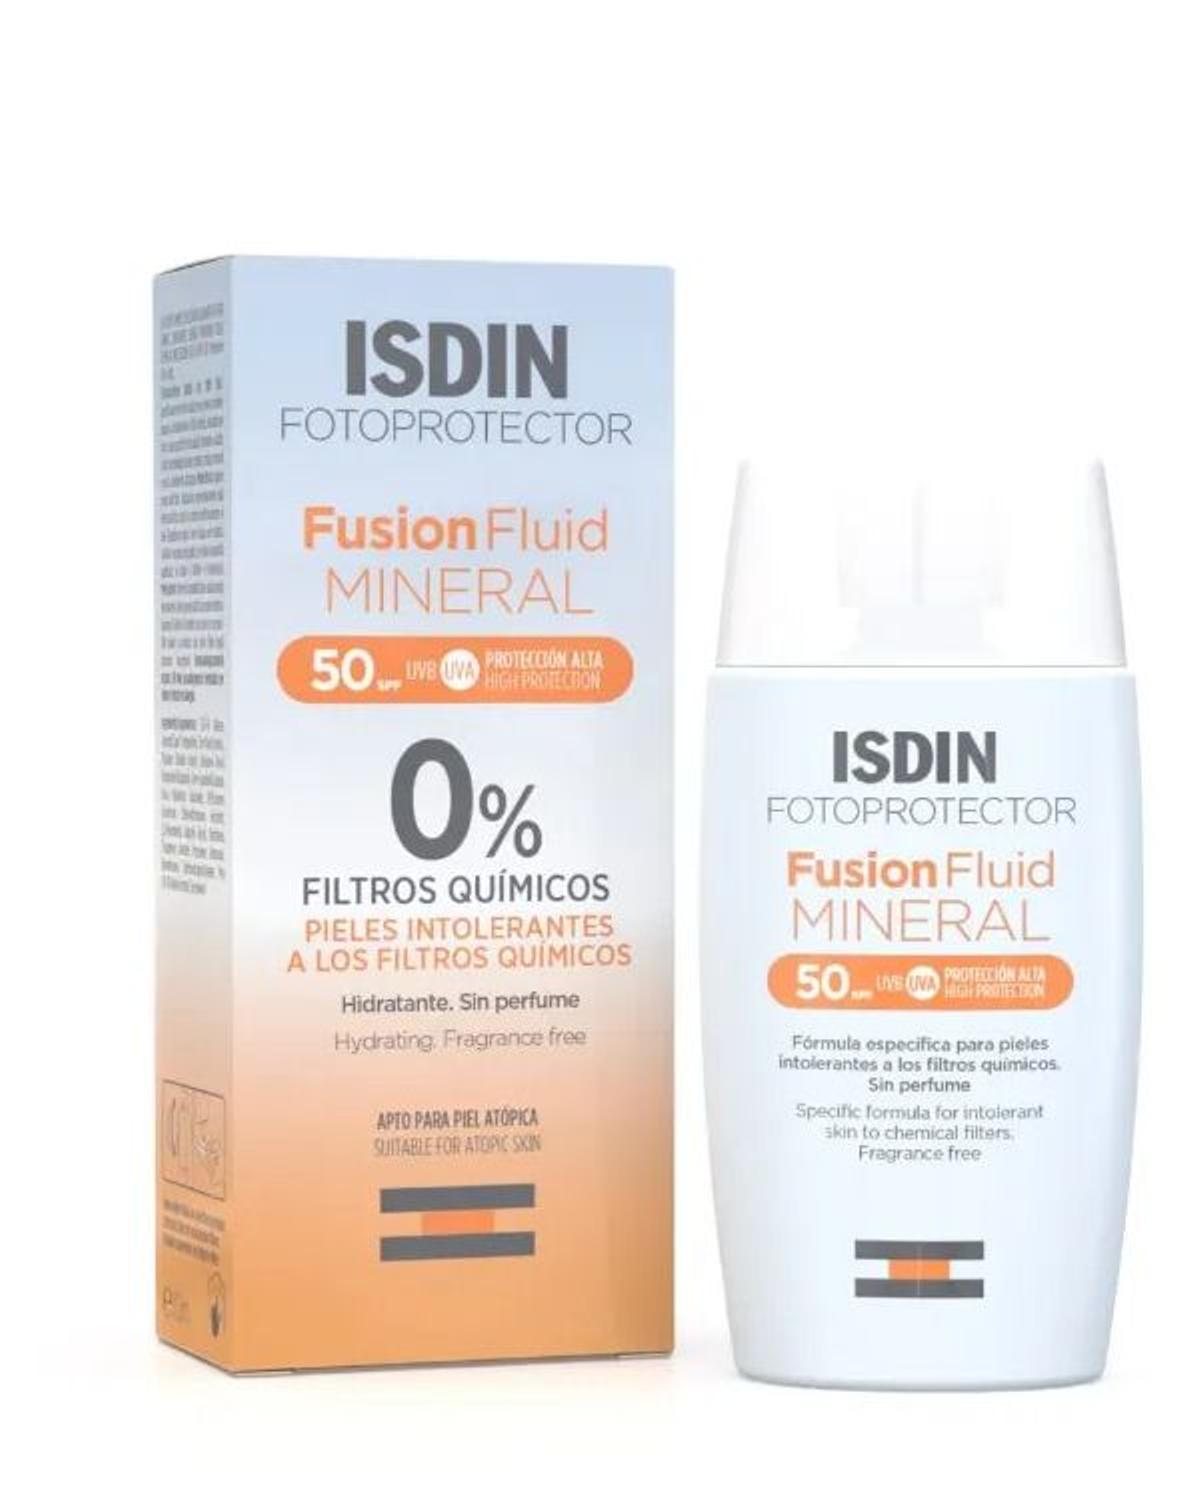 Fusion Fluid Mineral SPF50, de Isdin